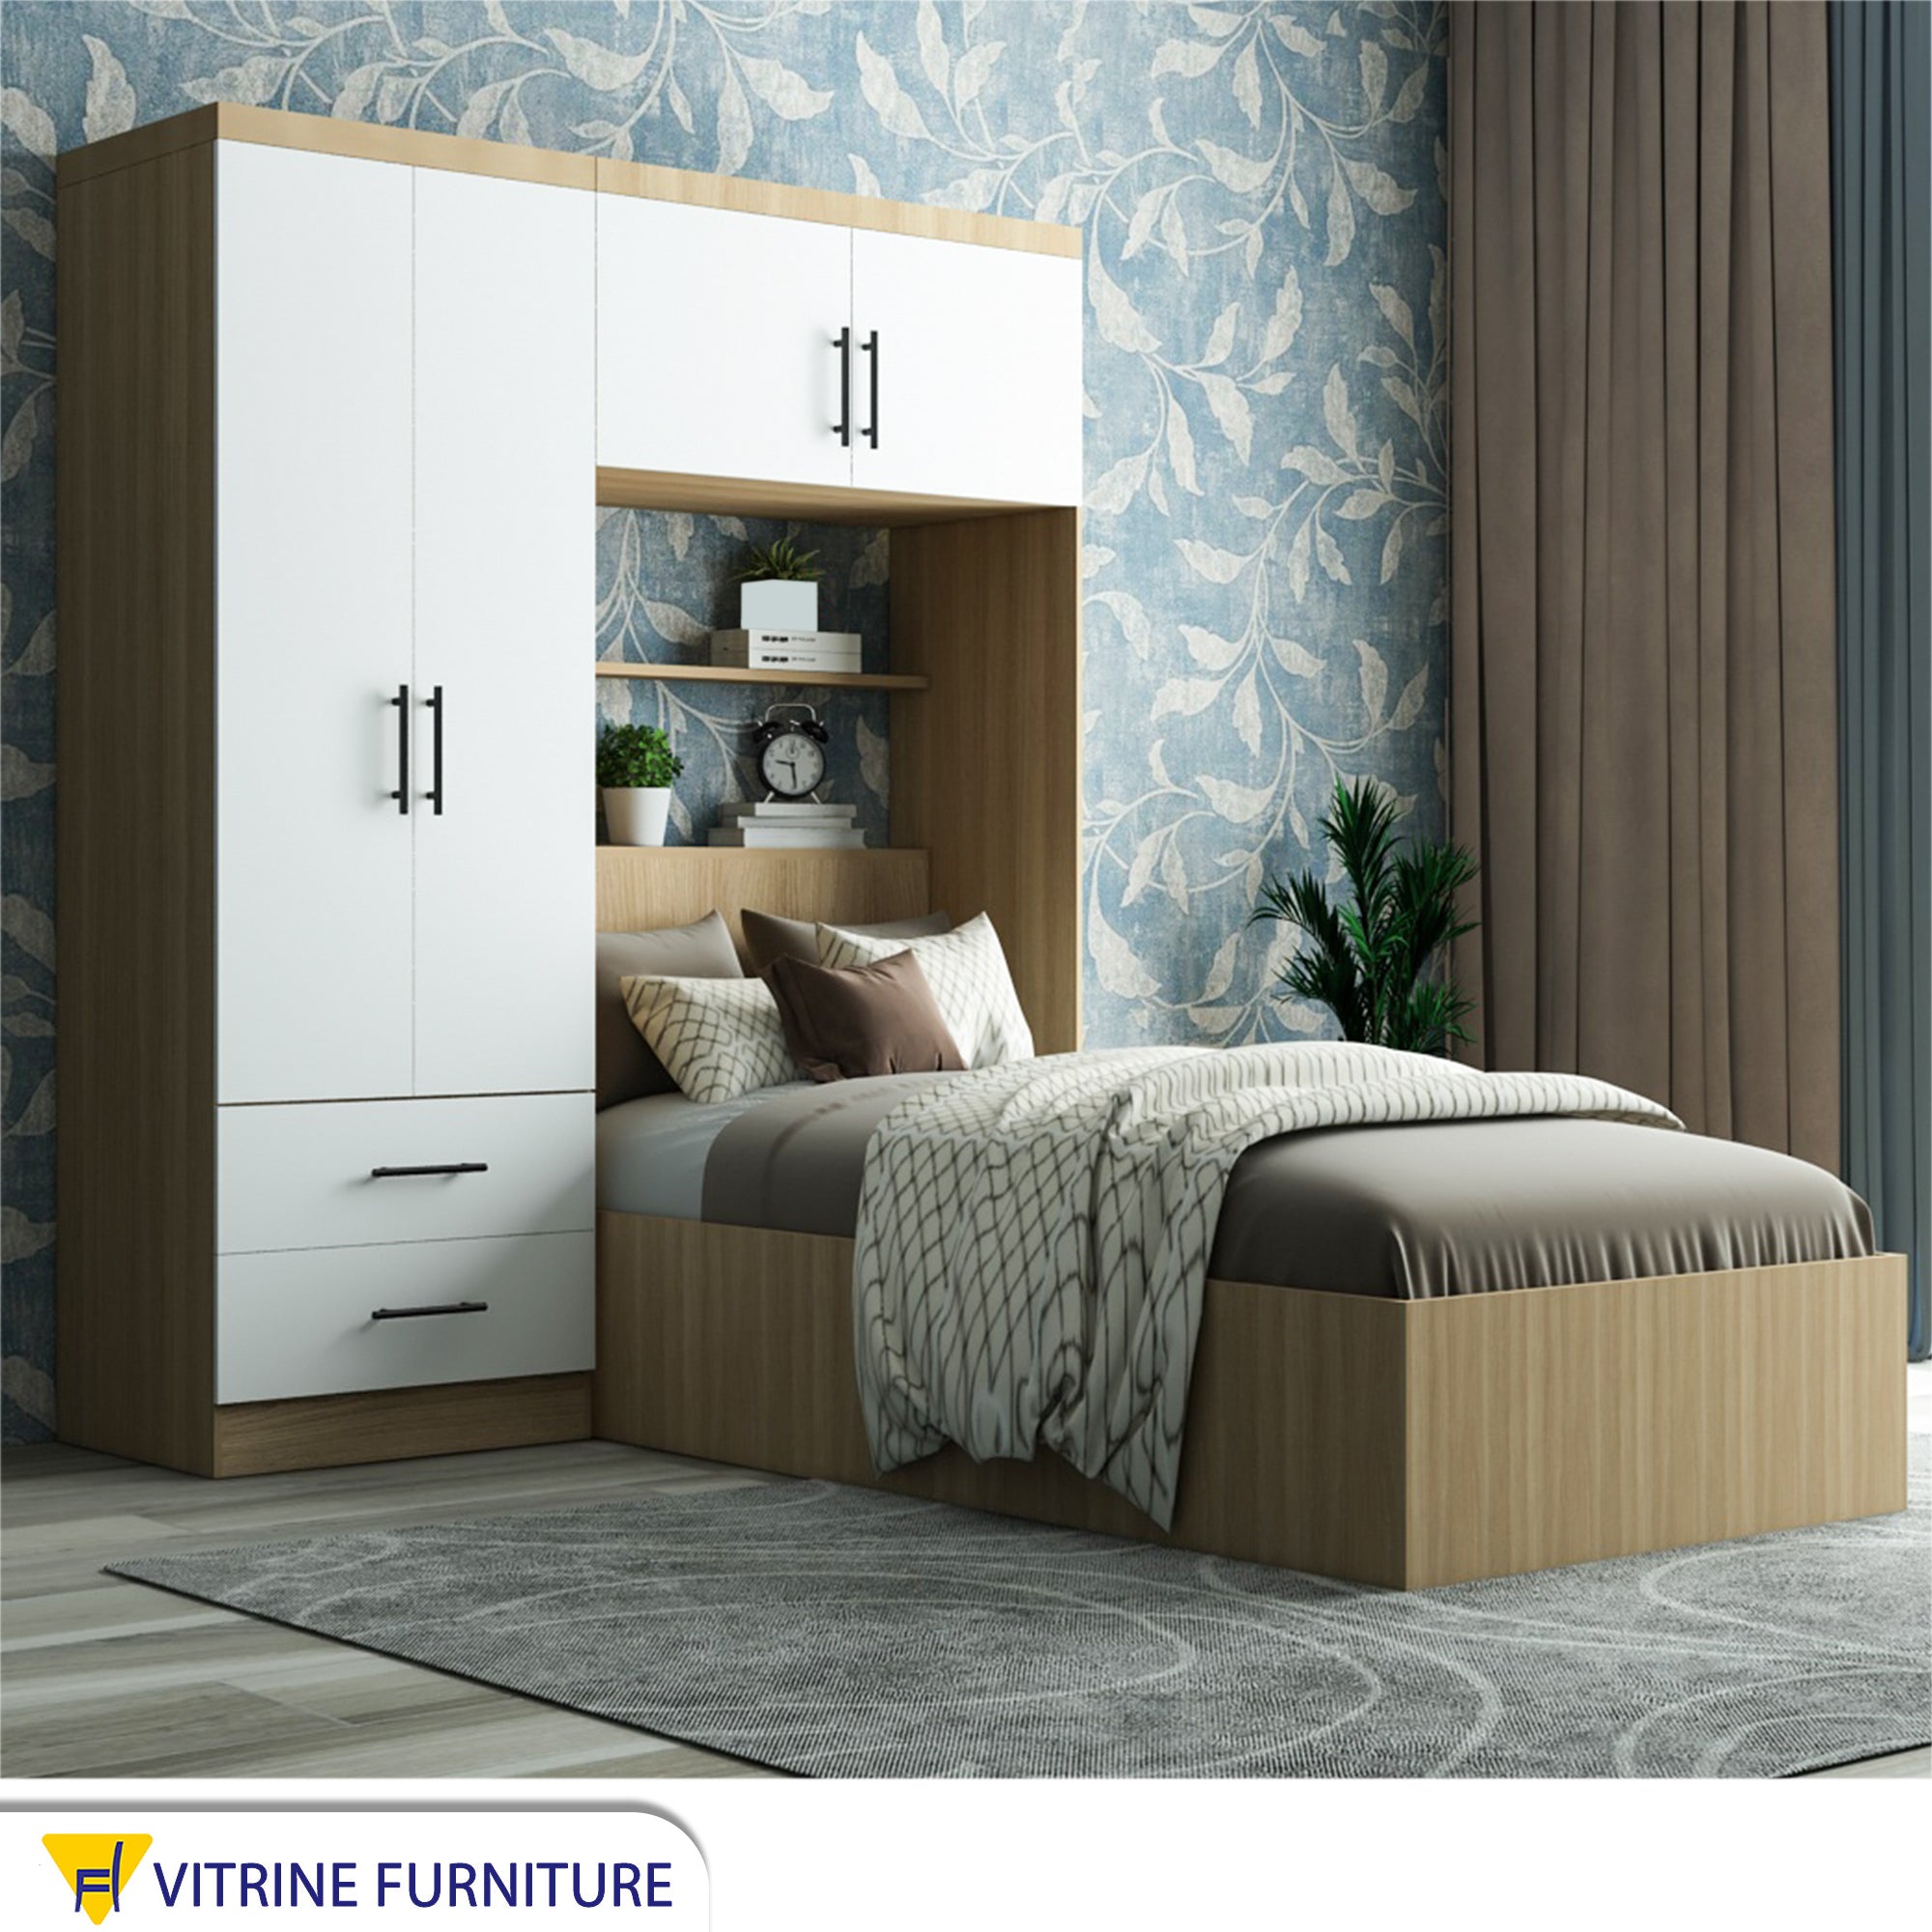 Single bedroom in unique wooden colour